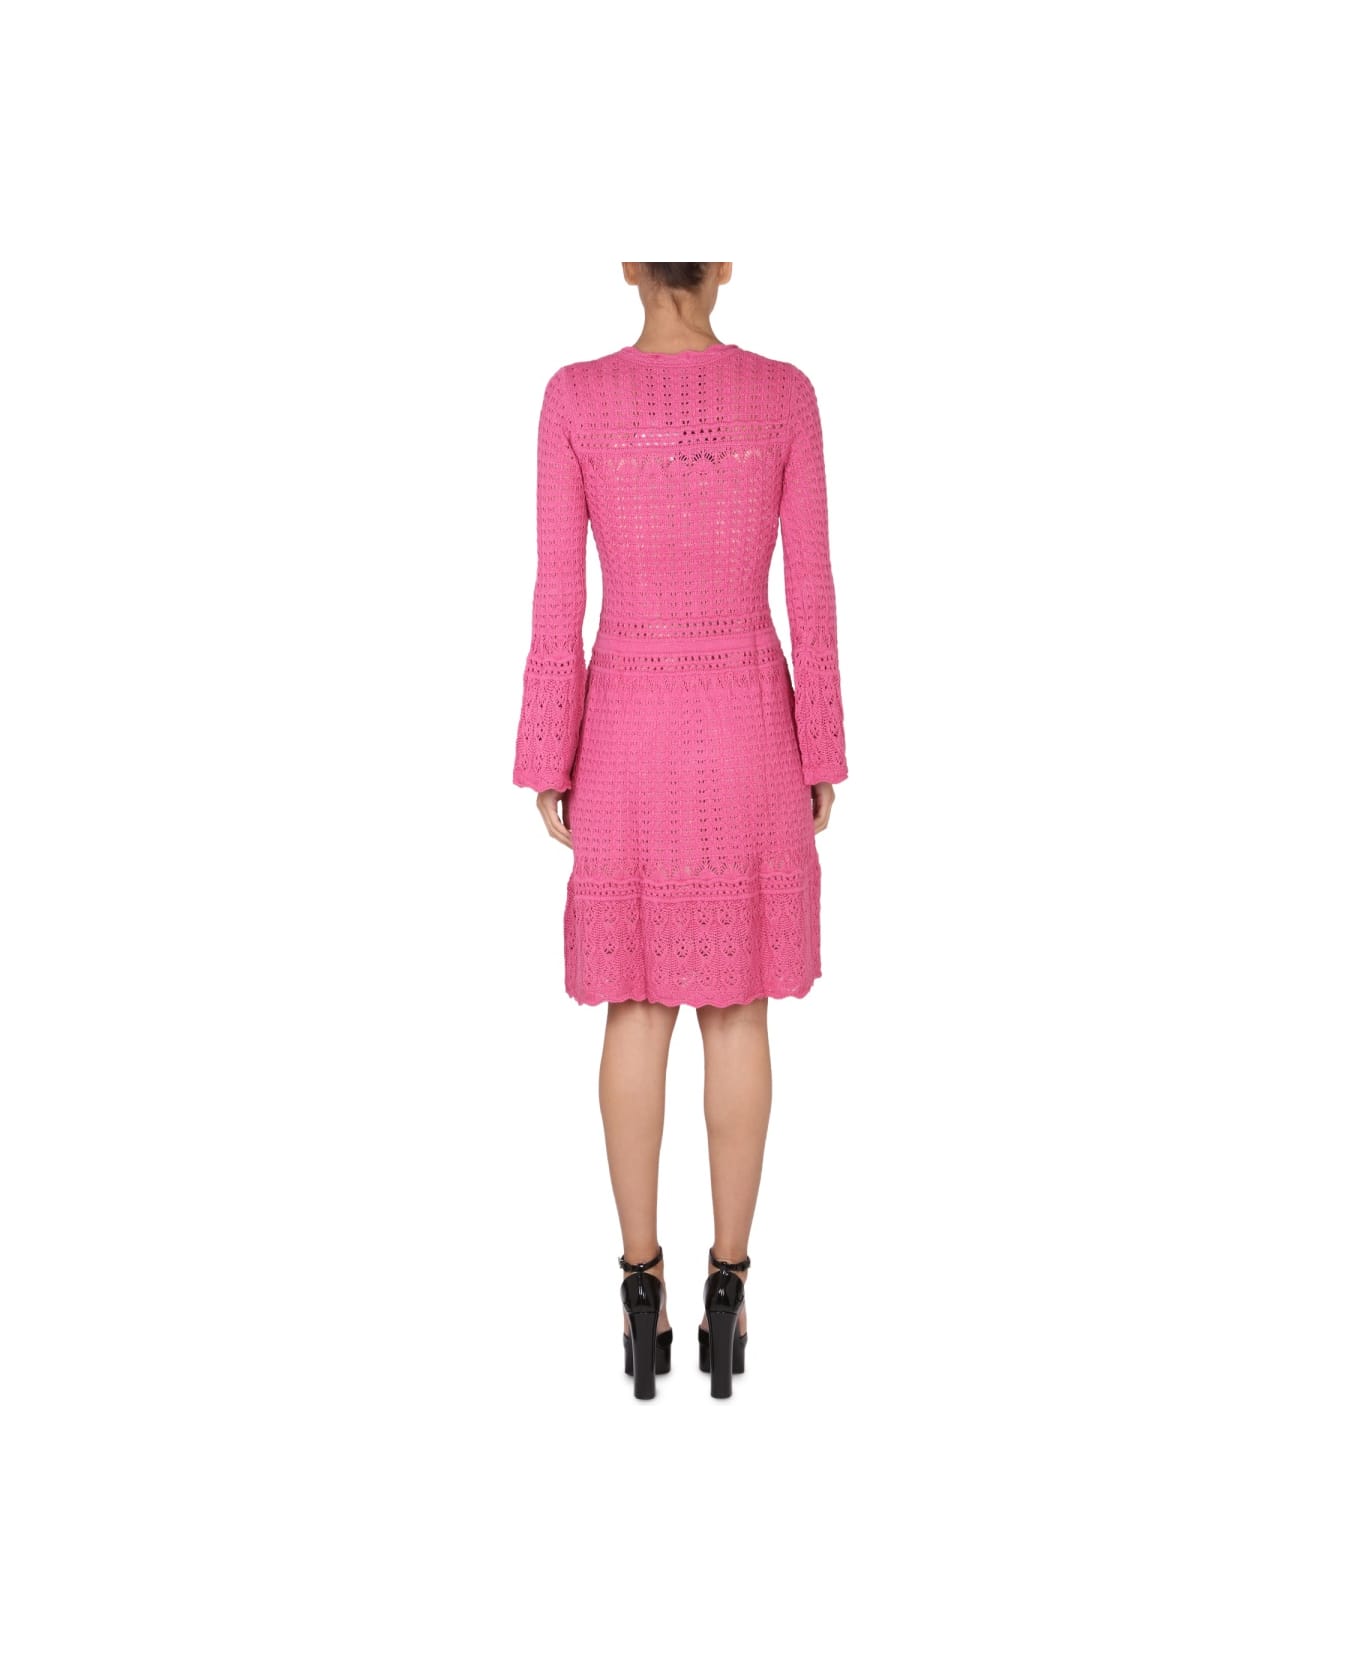 Boutique Moschino Wool Blend Dress - PINK